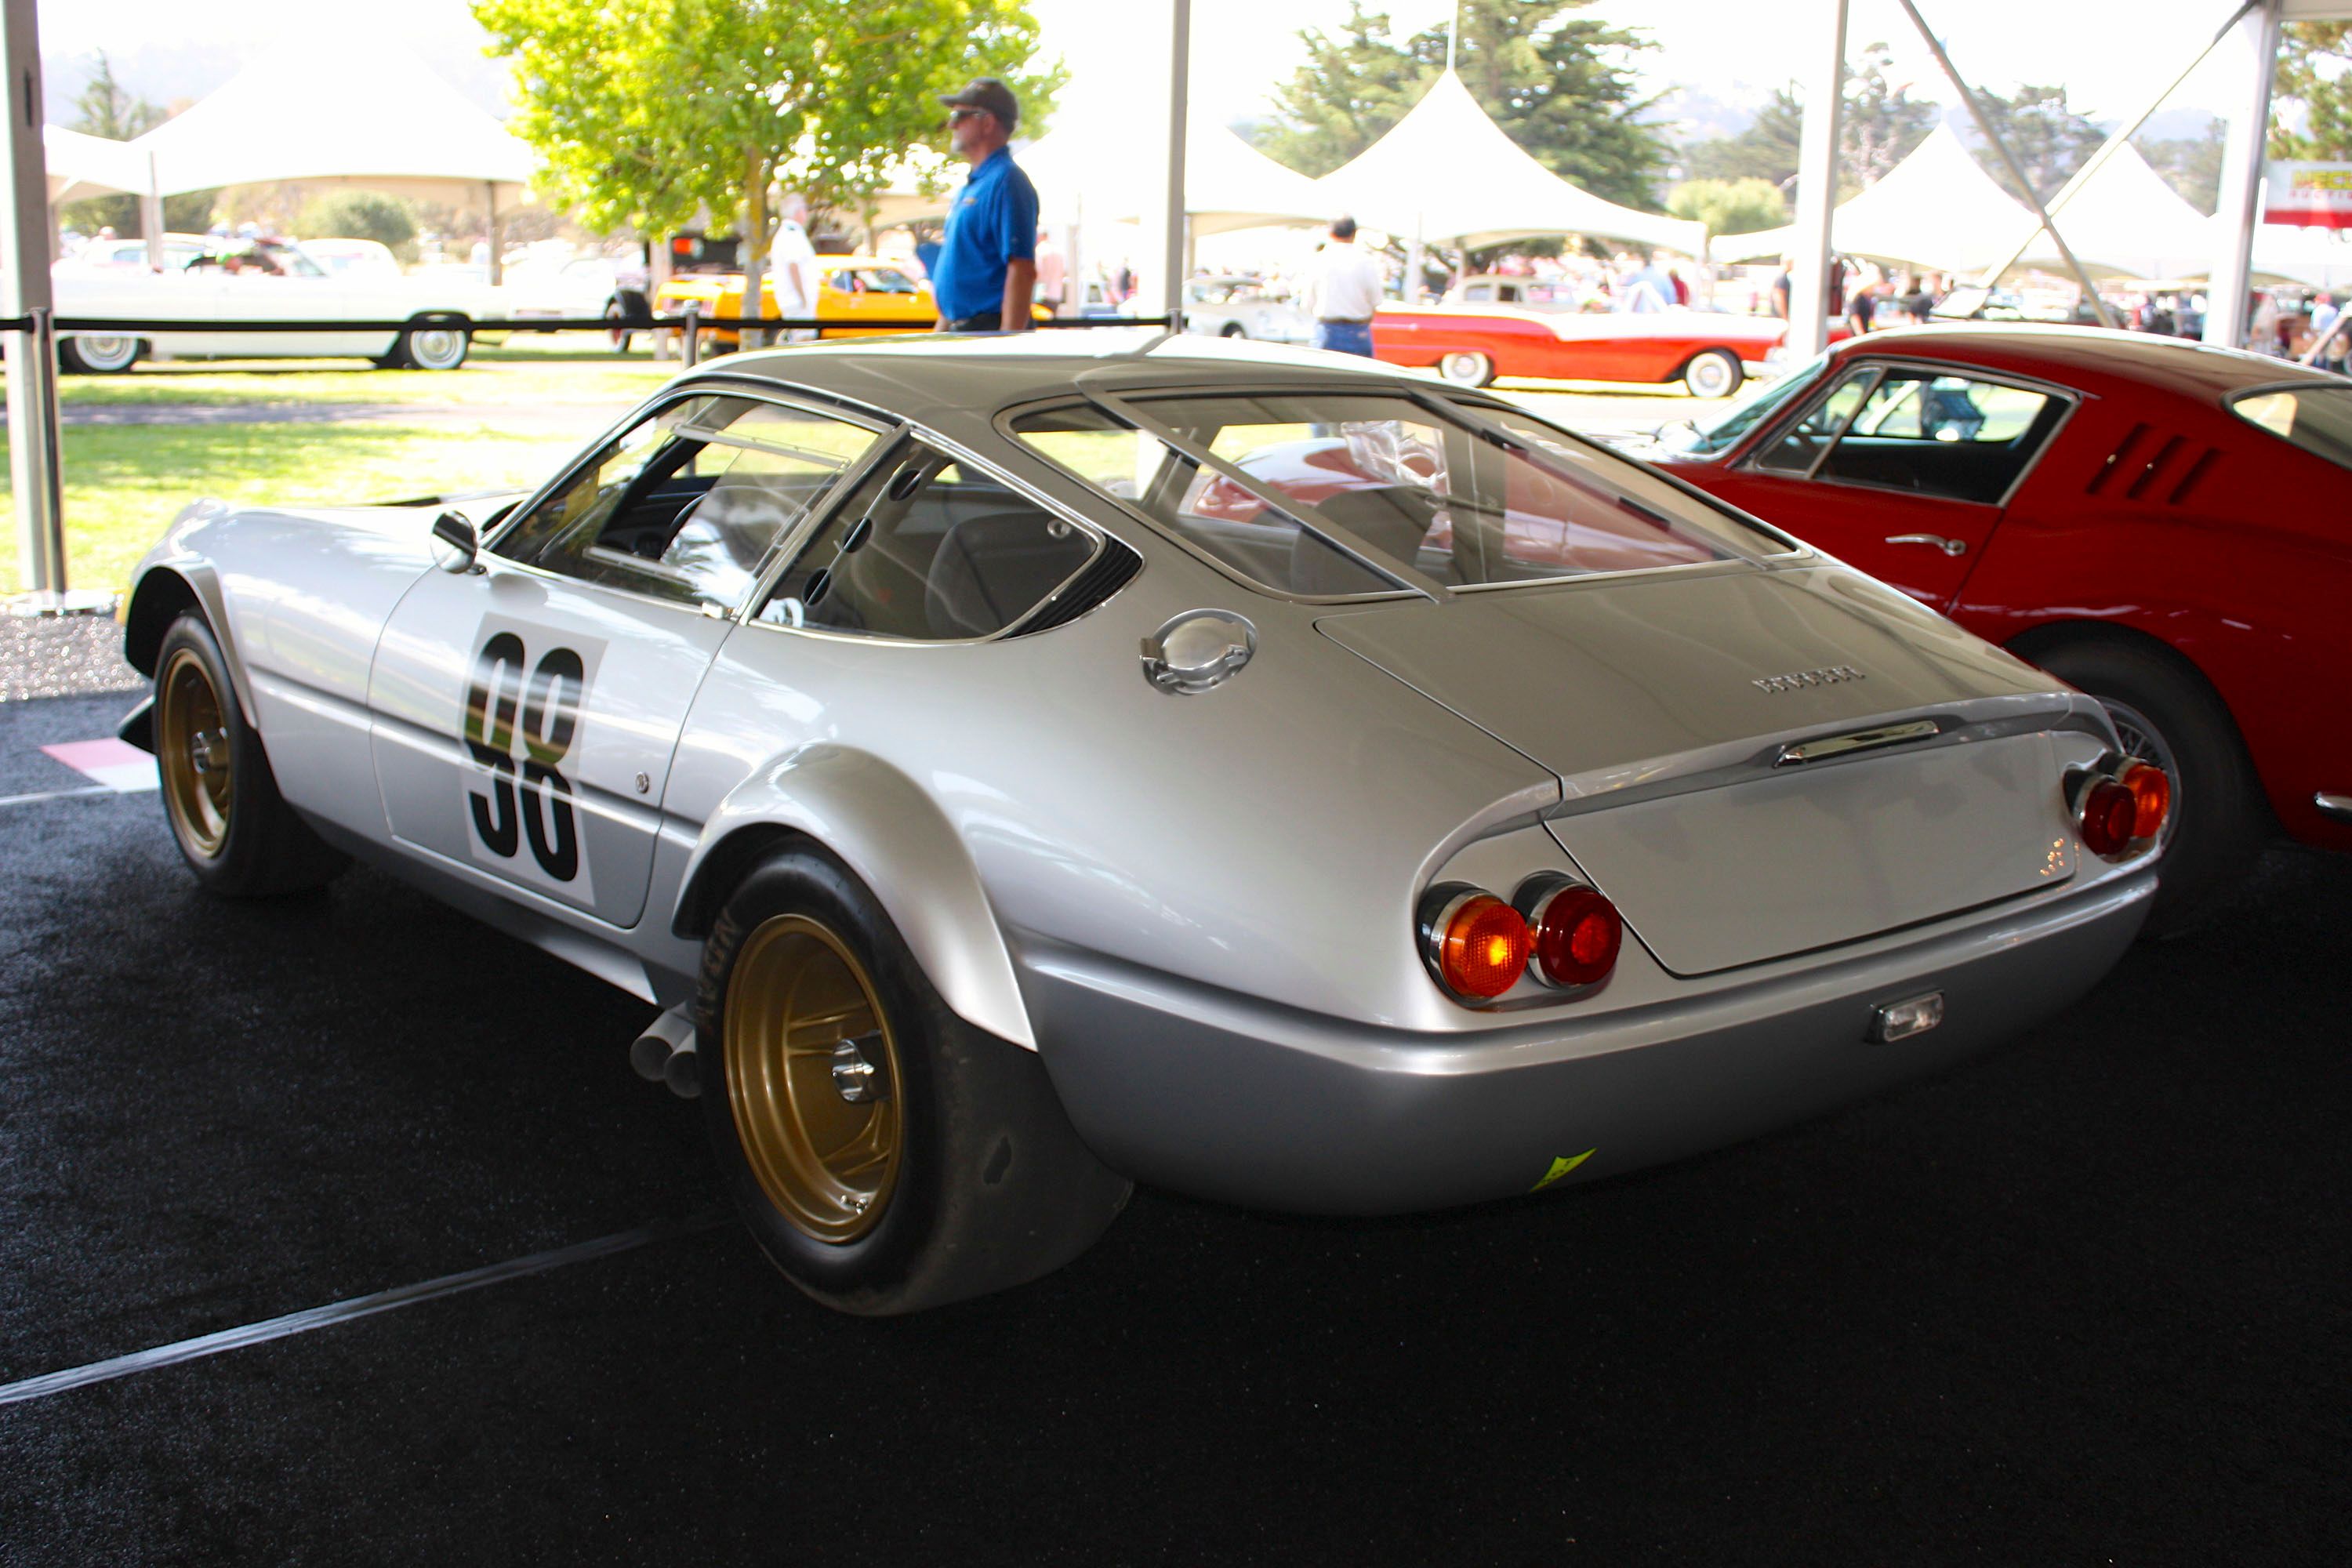 1968 Ferrari 365 GTB/4 and GTS/4 “Daytona”